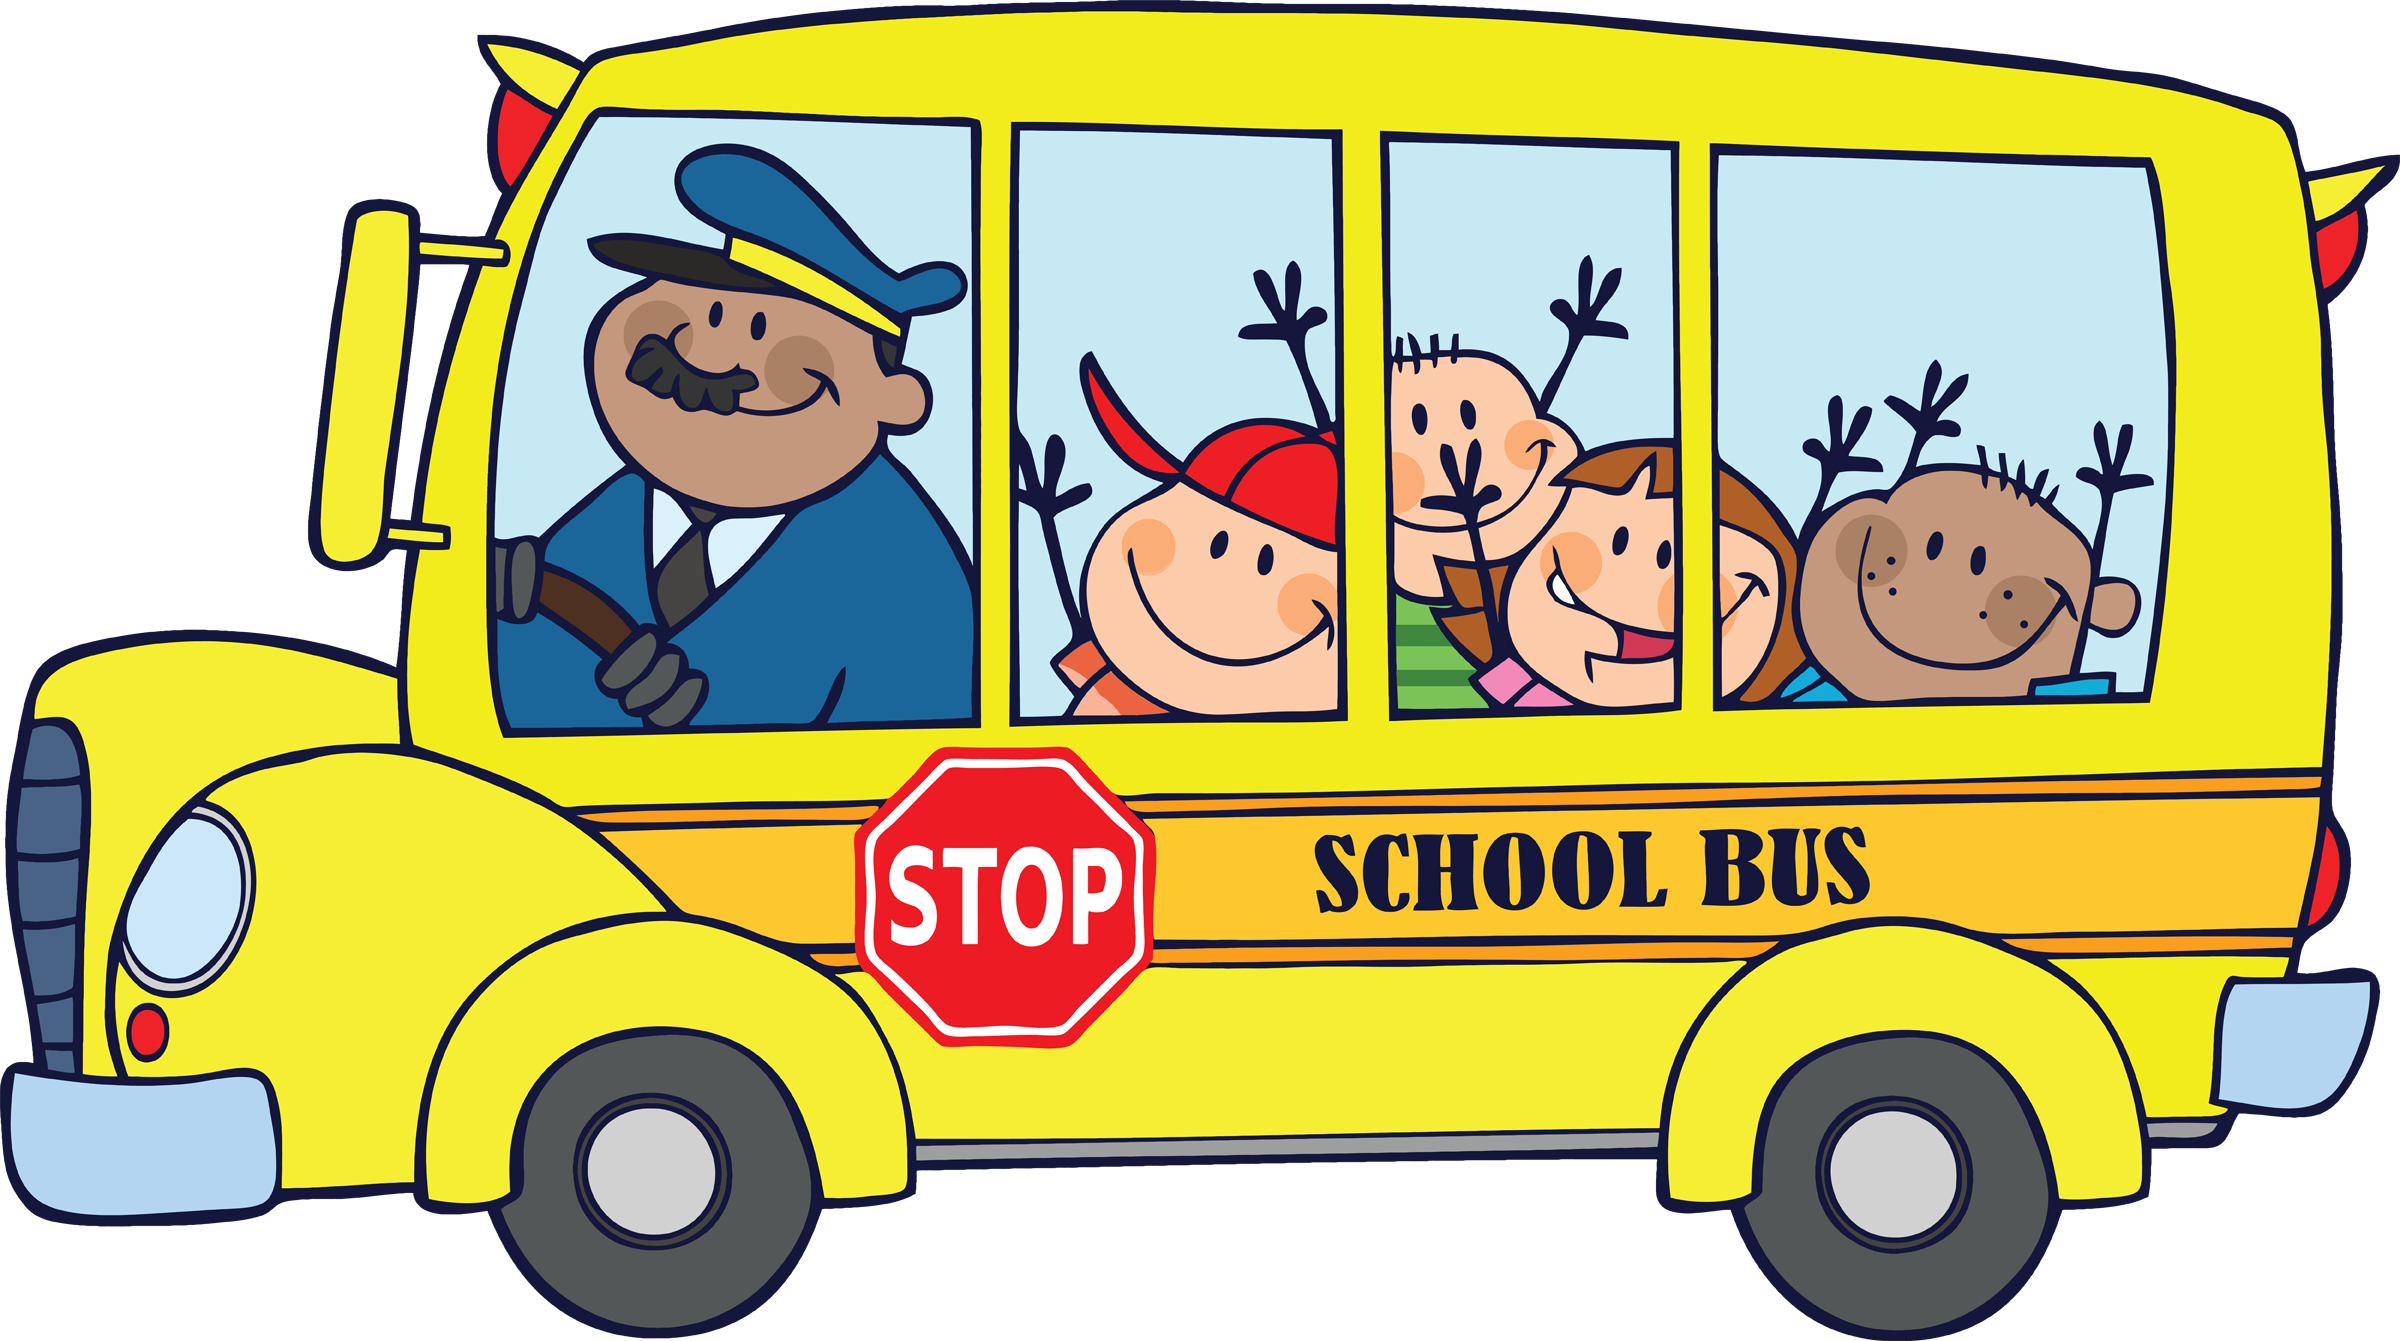 School bus clip art for kids free clipart images 3